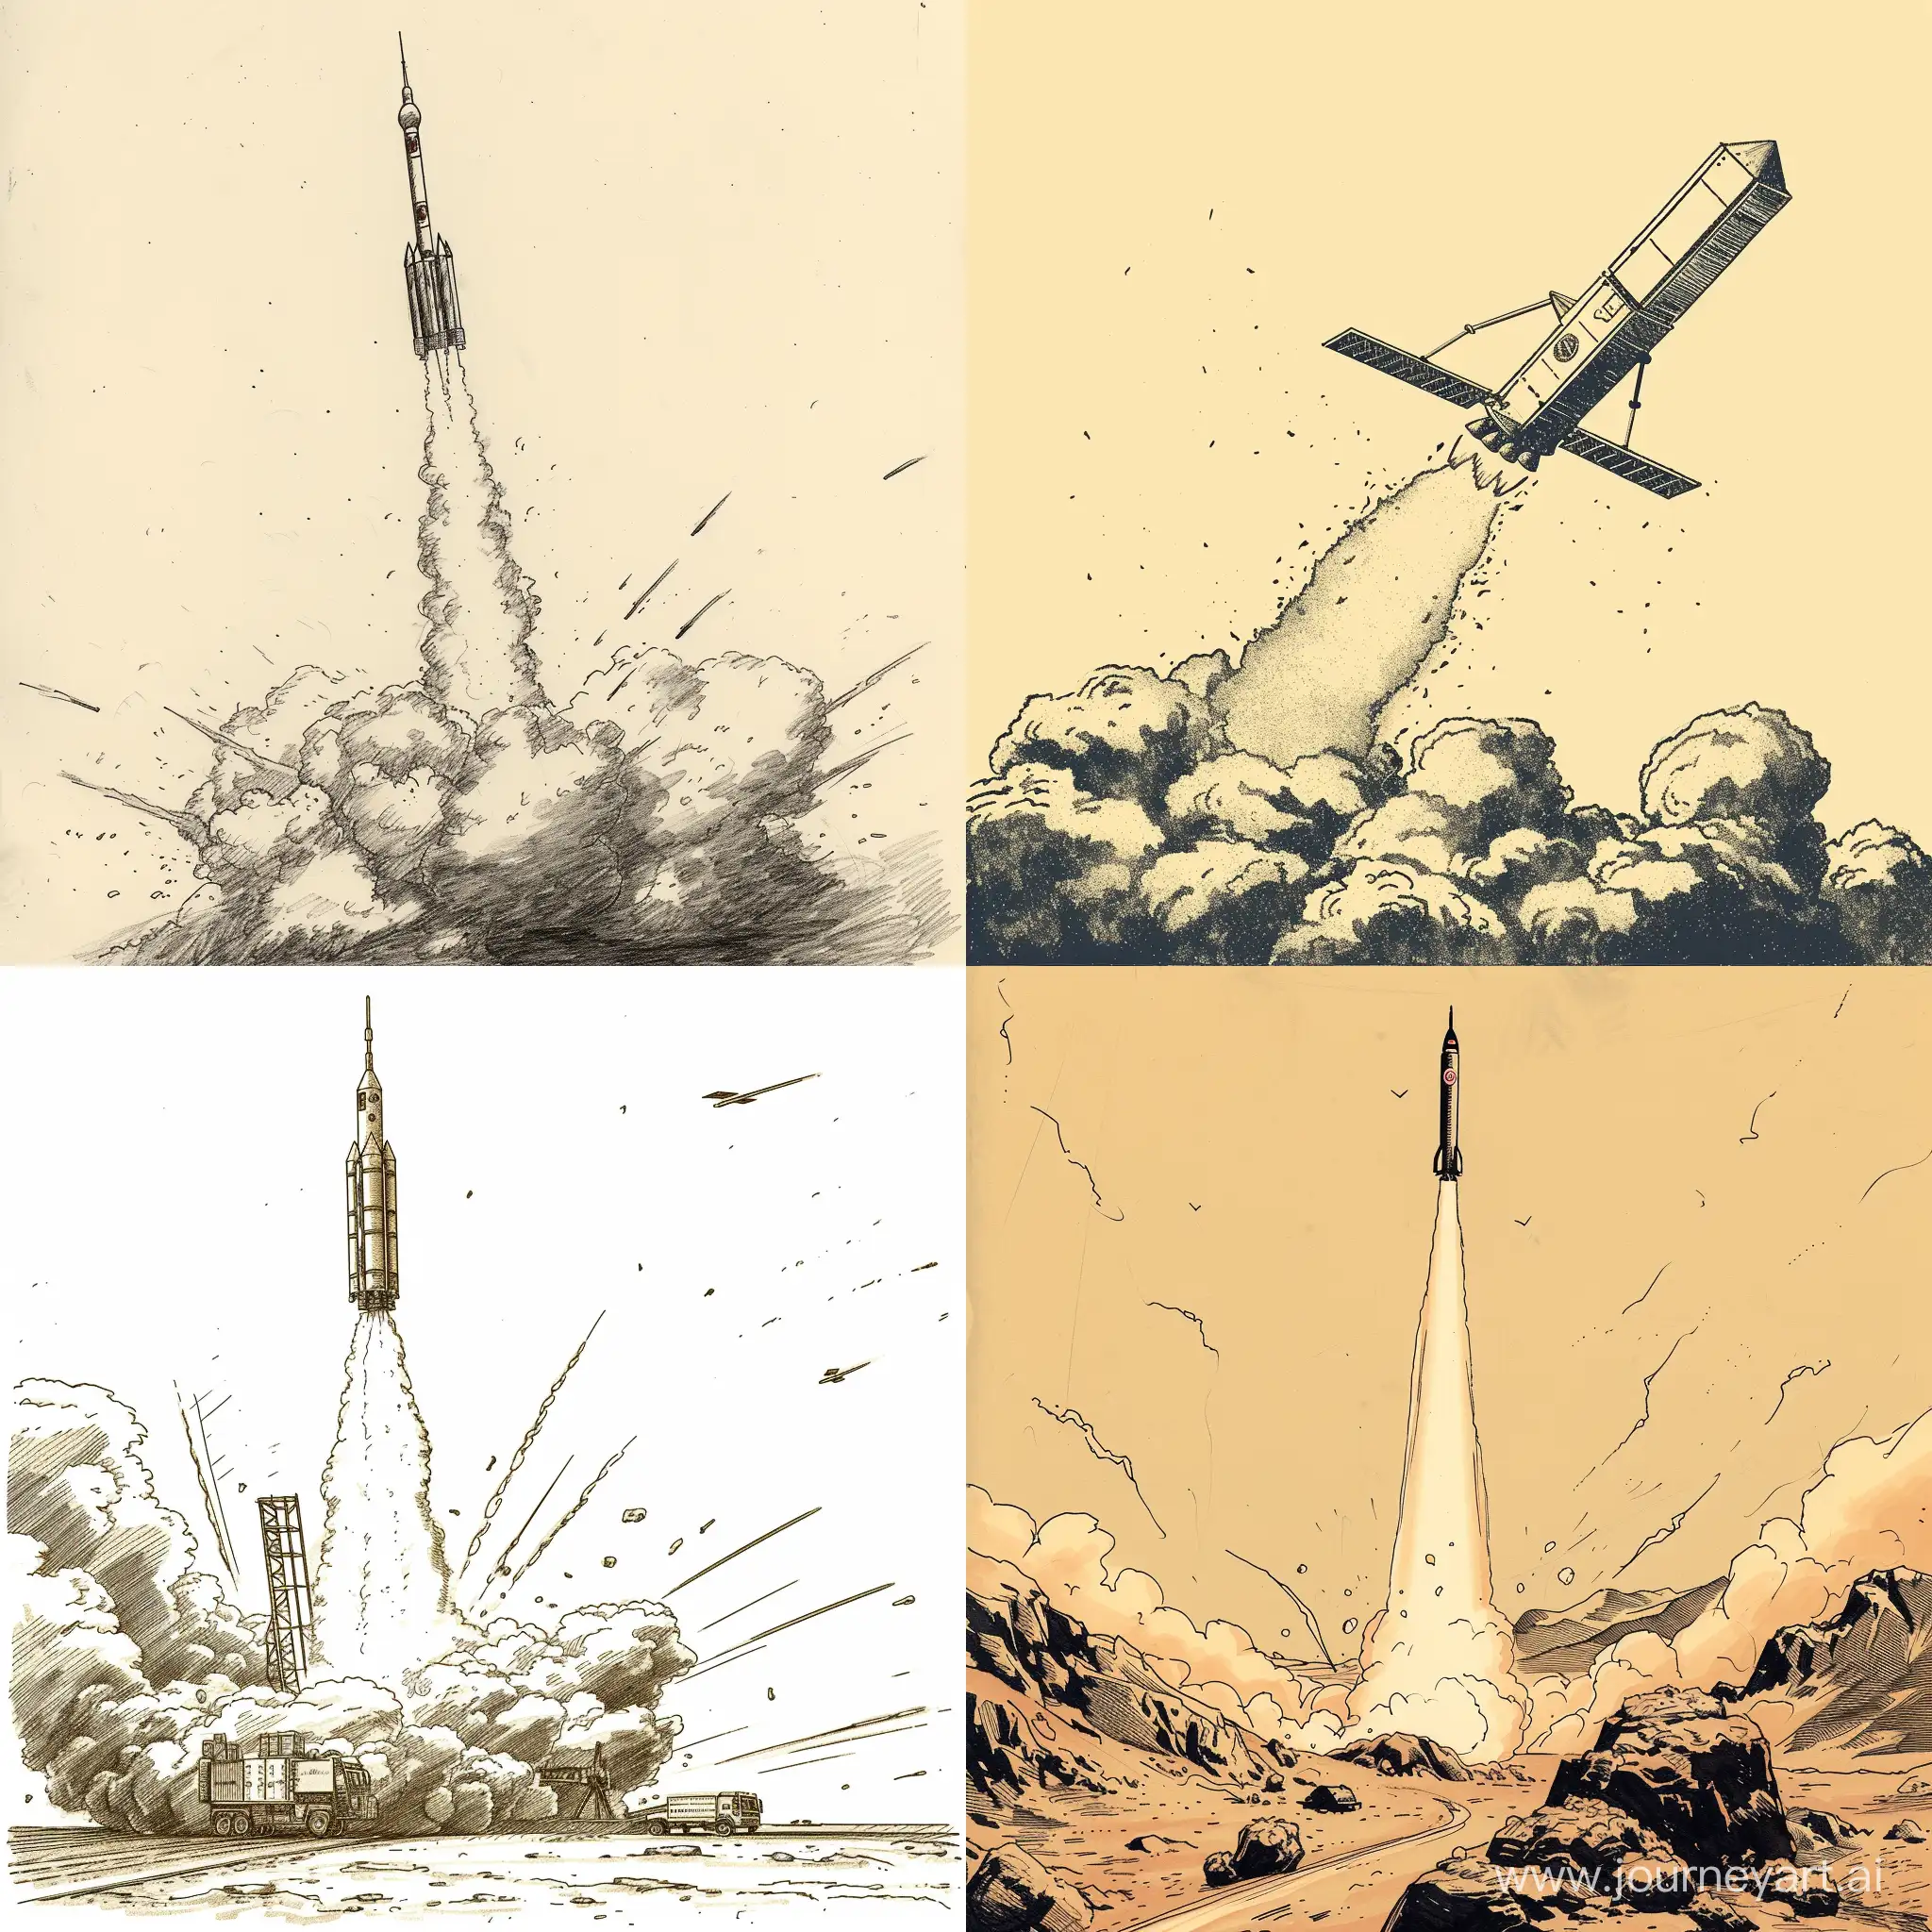 Iranian-Satellite-Launch-Striking-Image-of-Space-Exploration